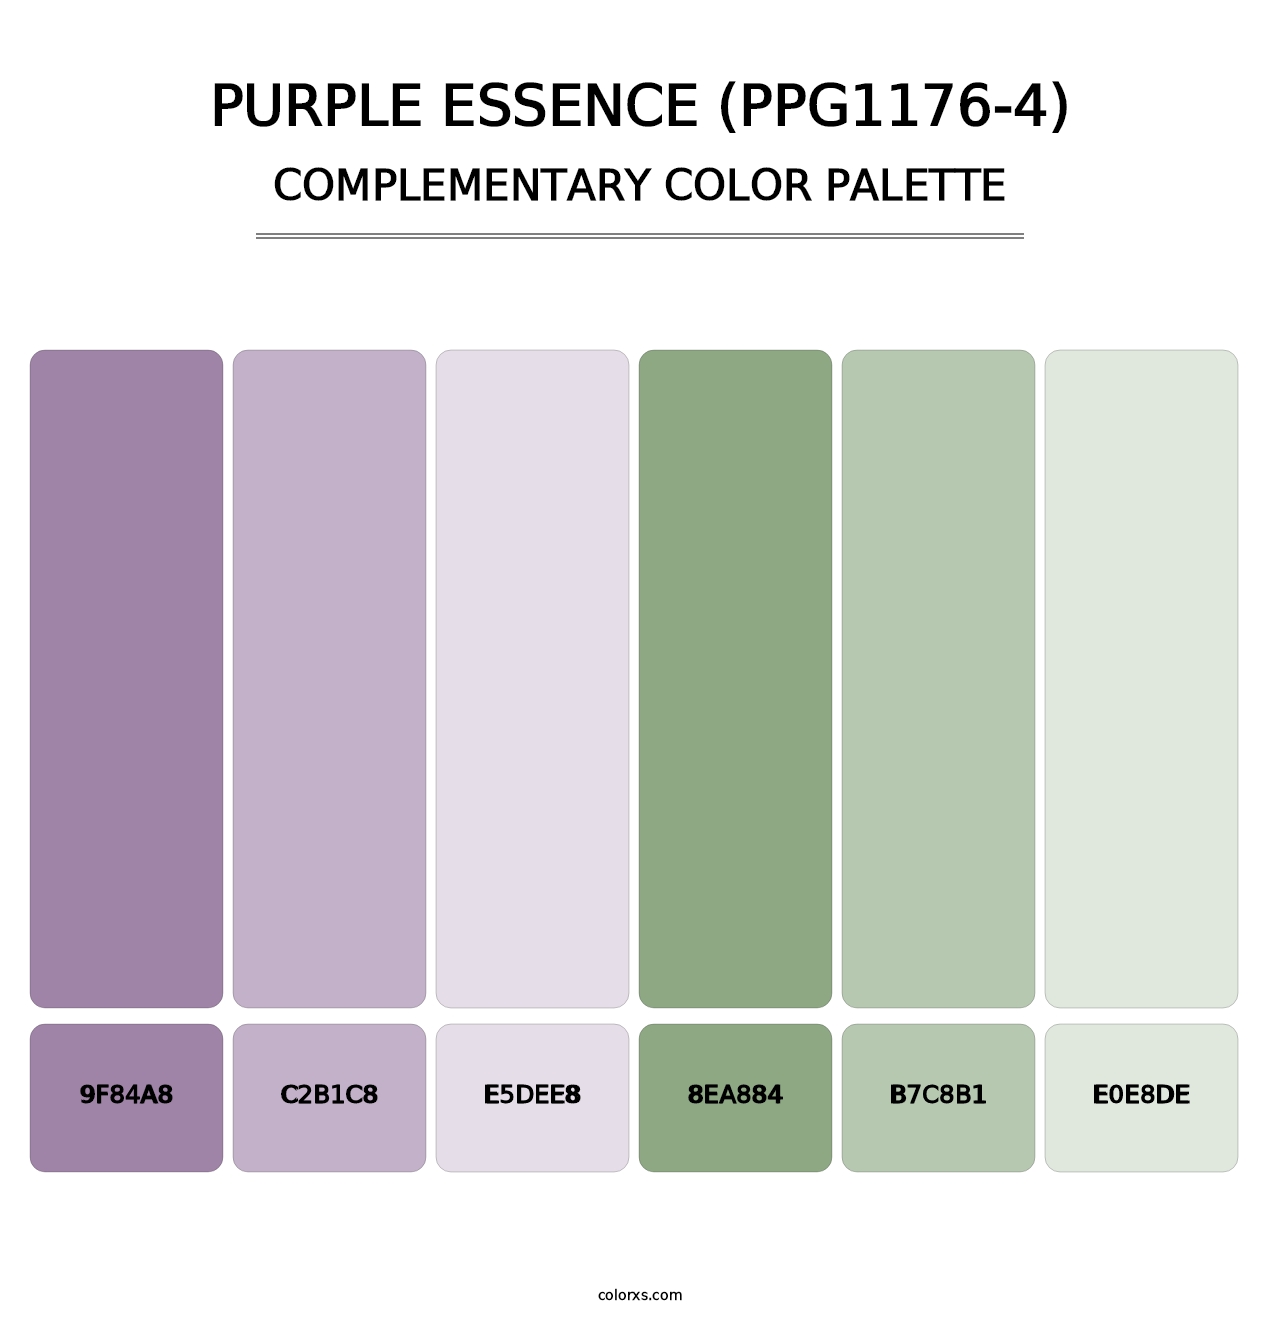 Purple Essence (PPG1176-4) - Complementary Color Palette